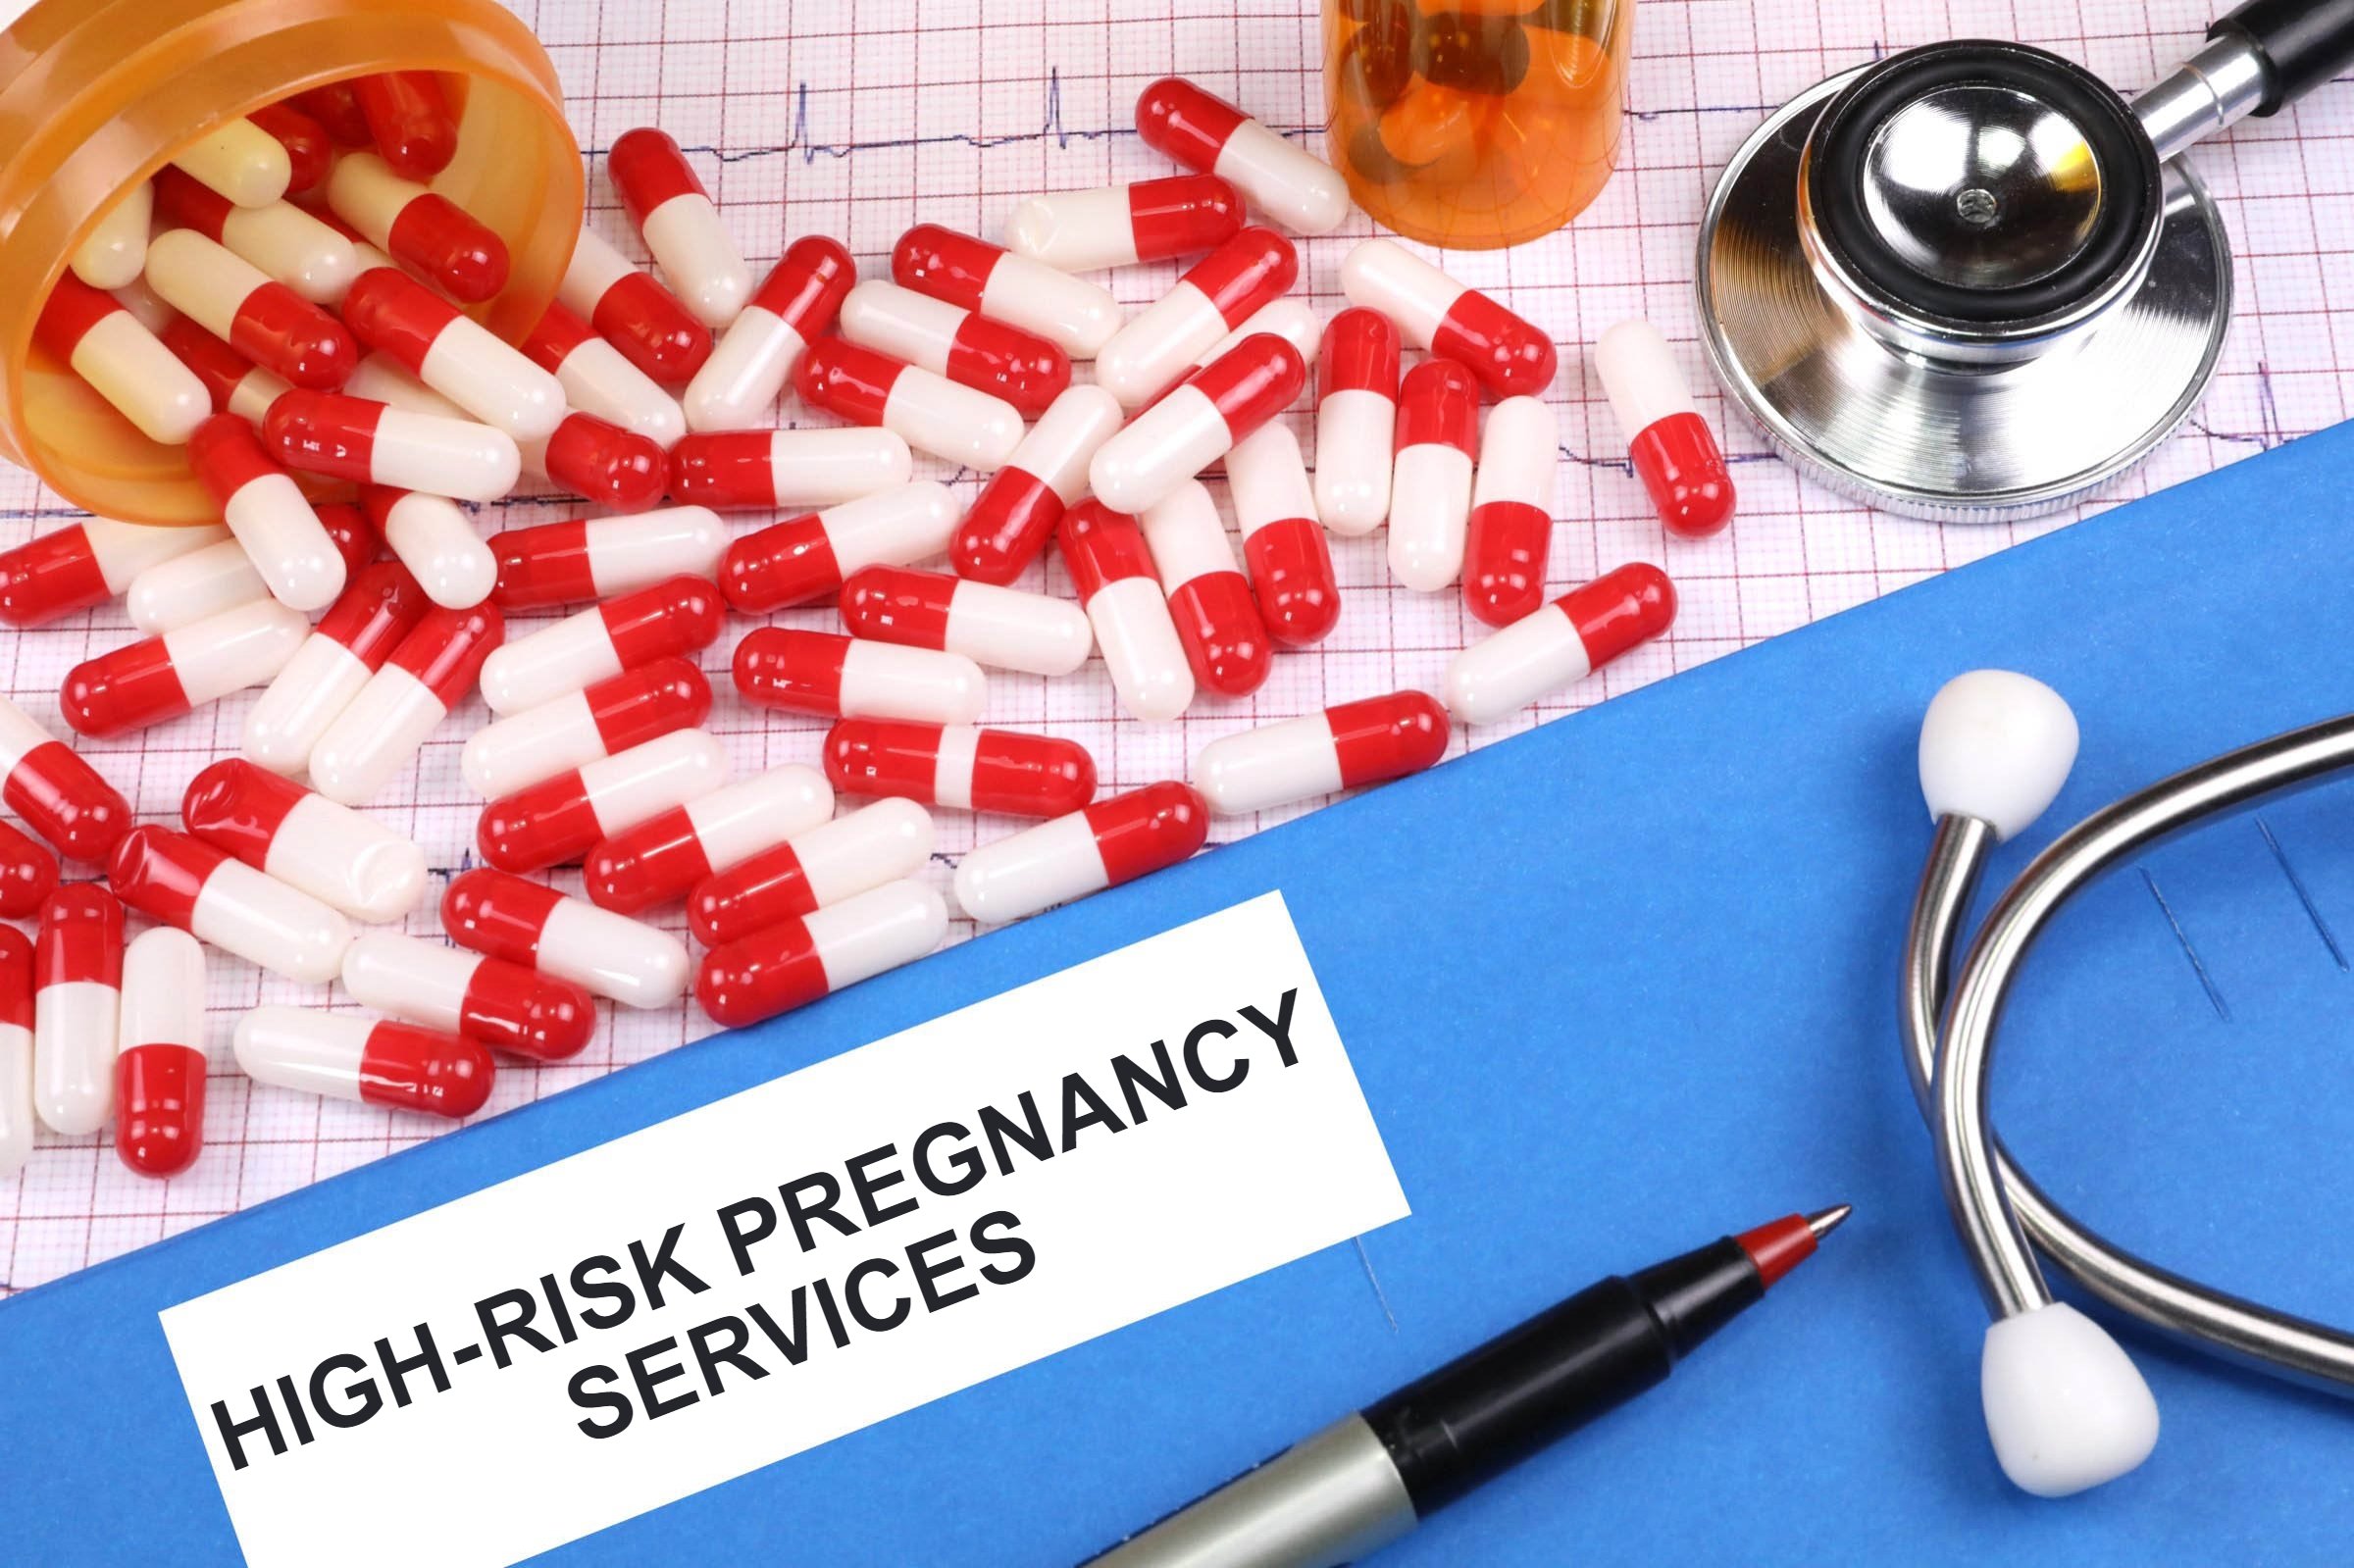 high risk pregnancy services